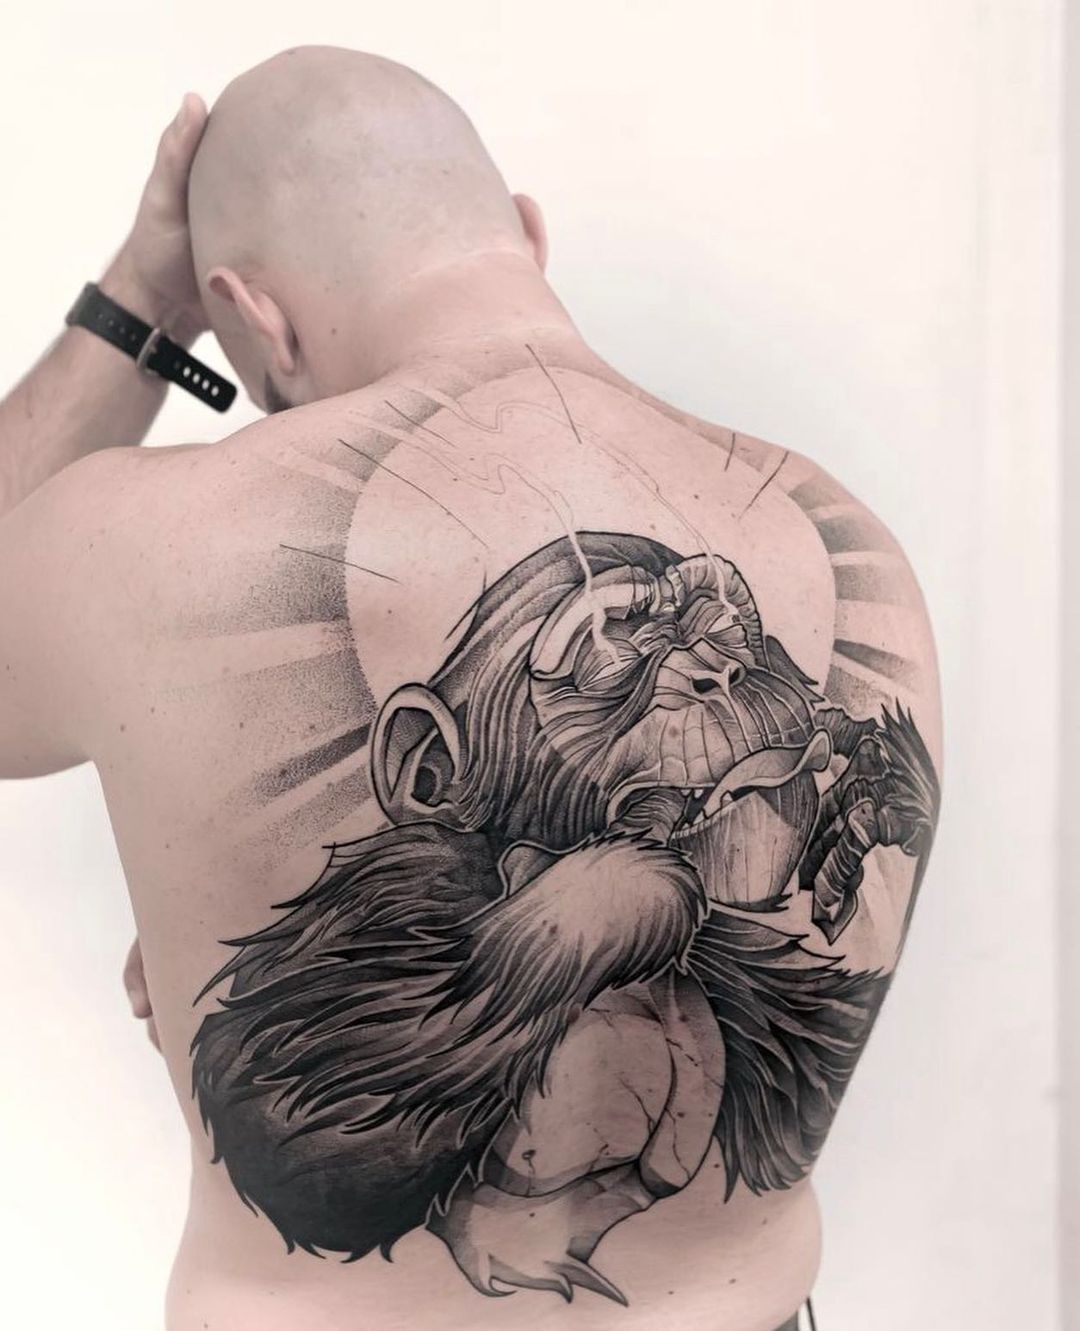 Amazing monkey tattoo by concreteforty